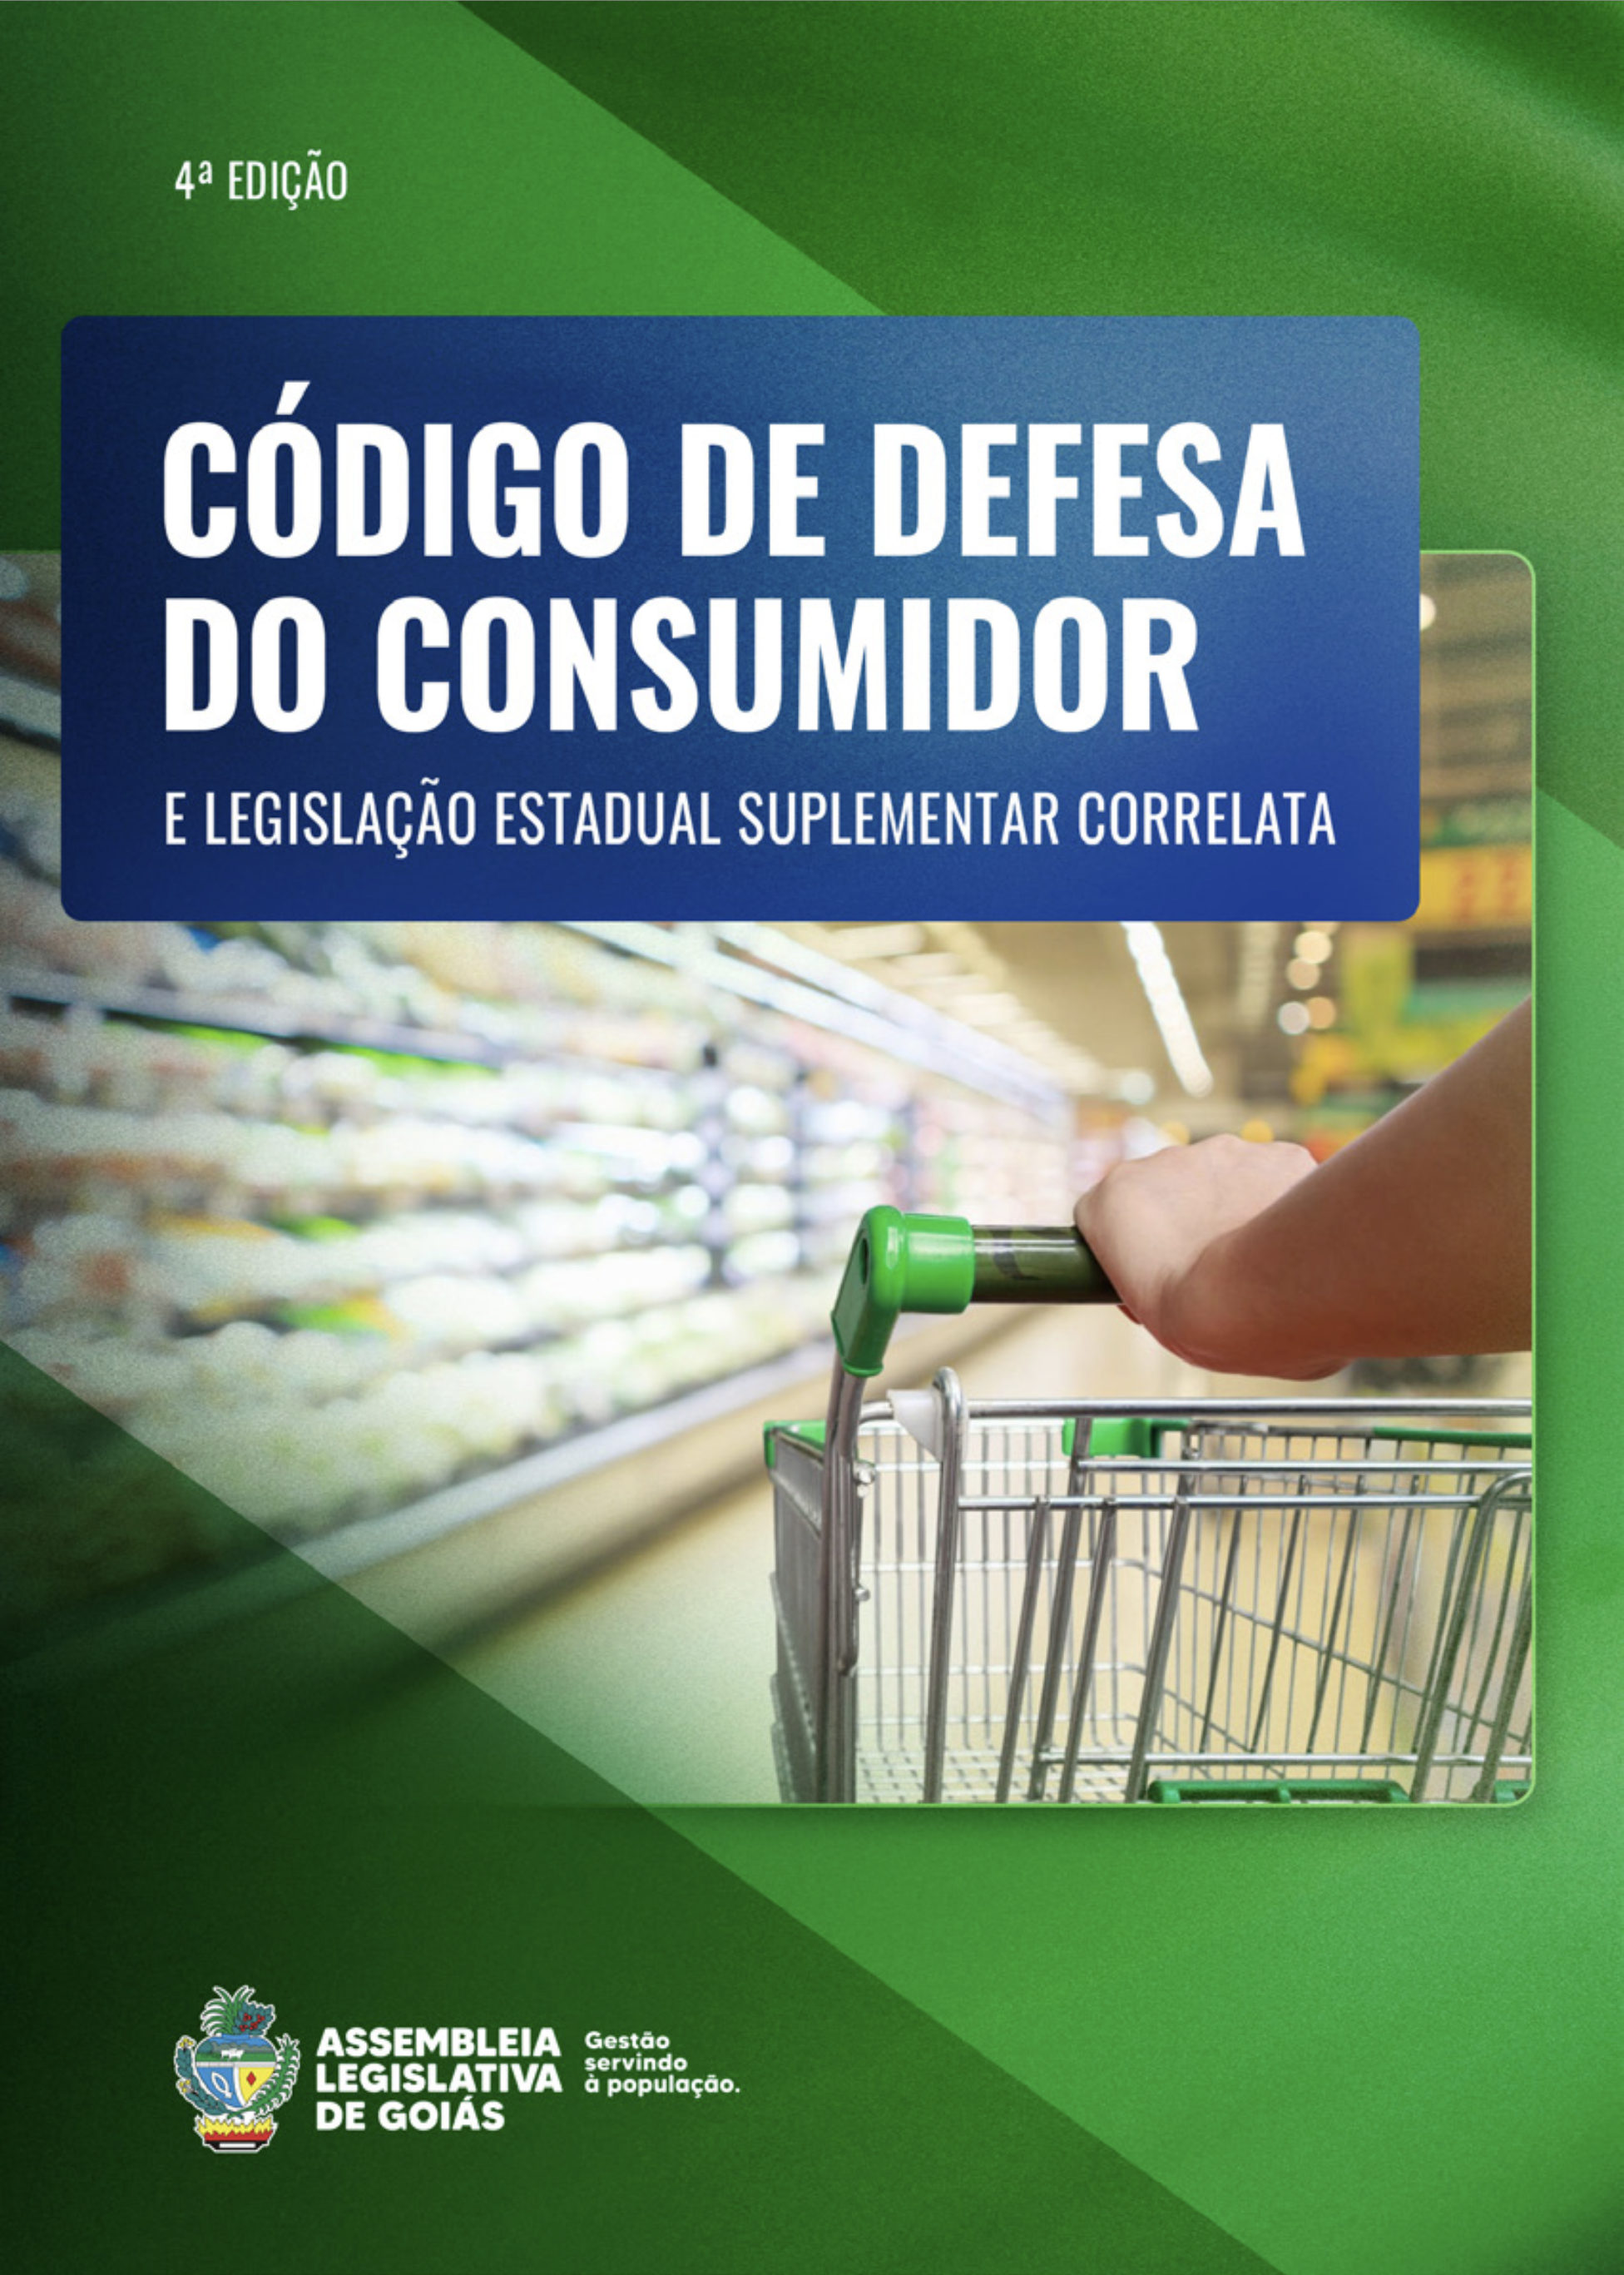 Capa do codigo de defesa do consumidor